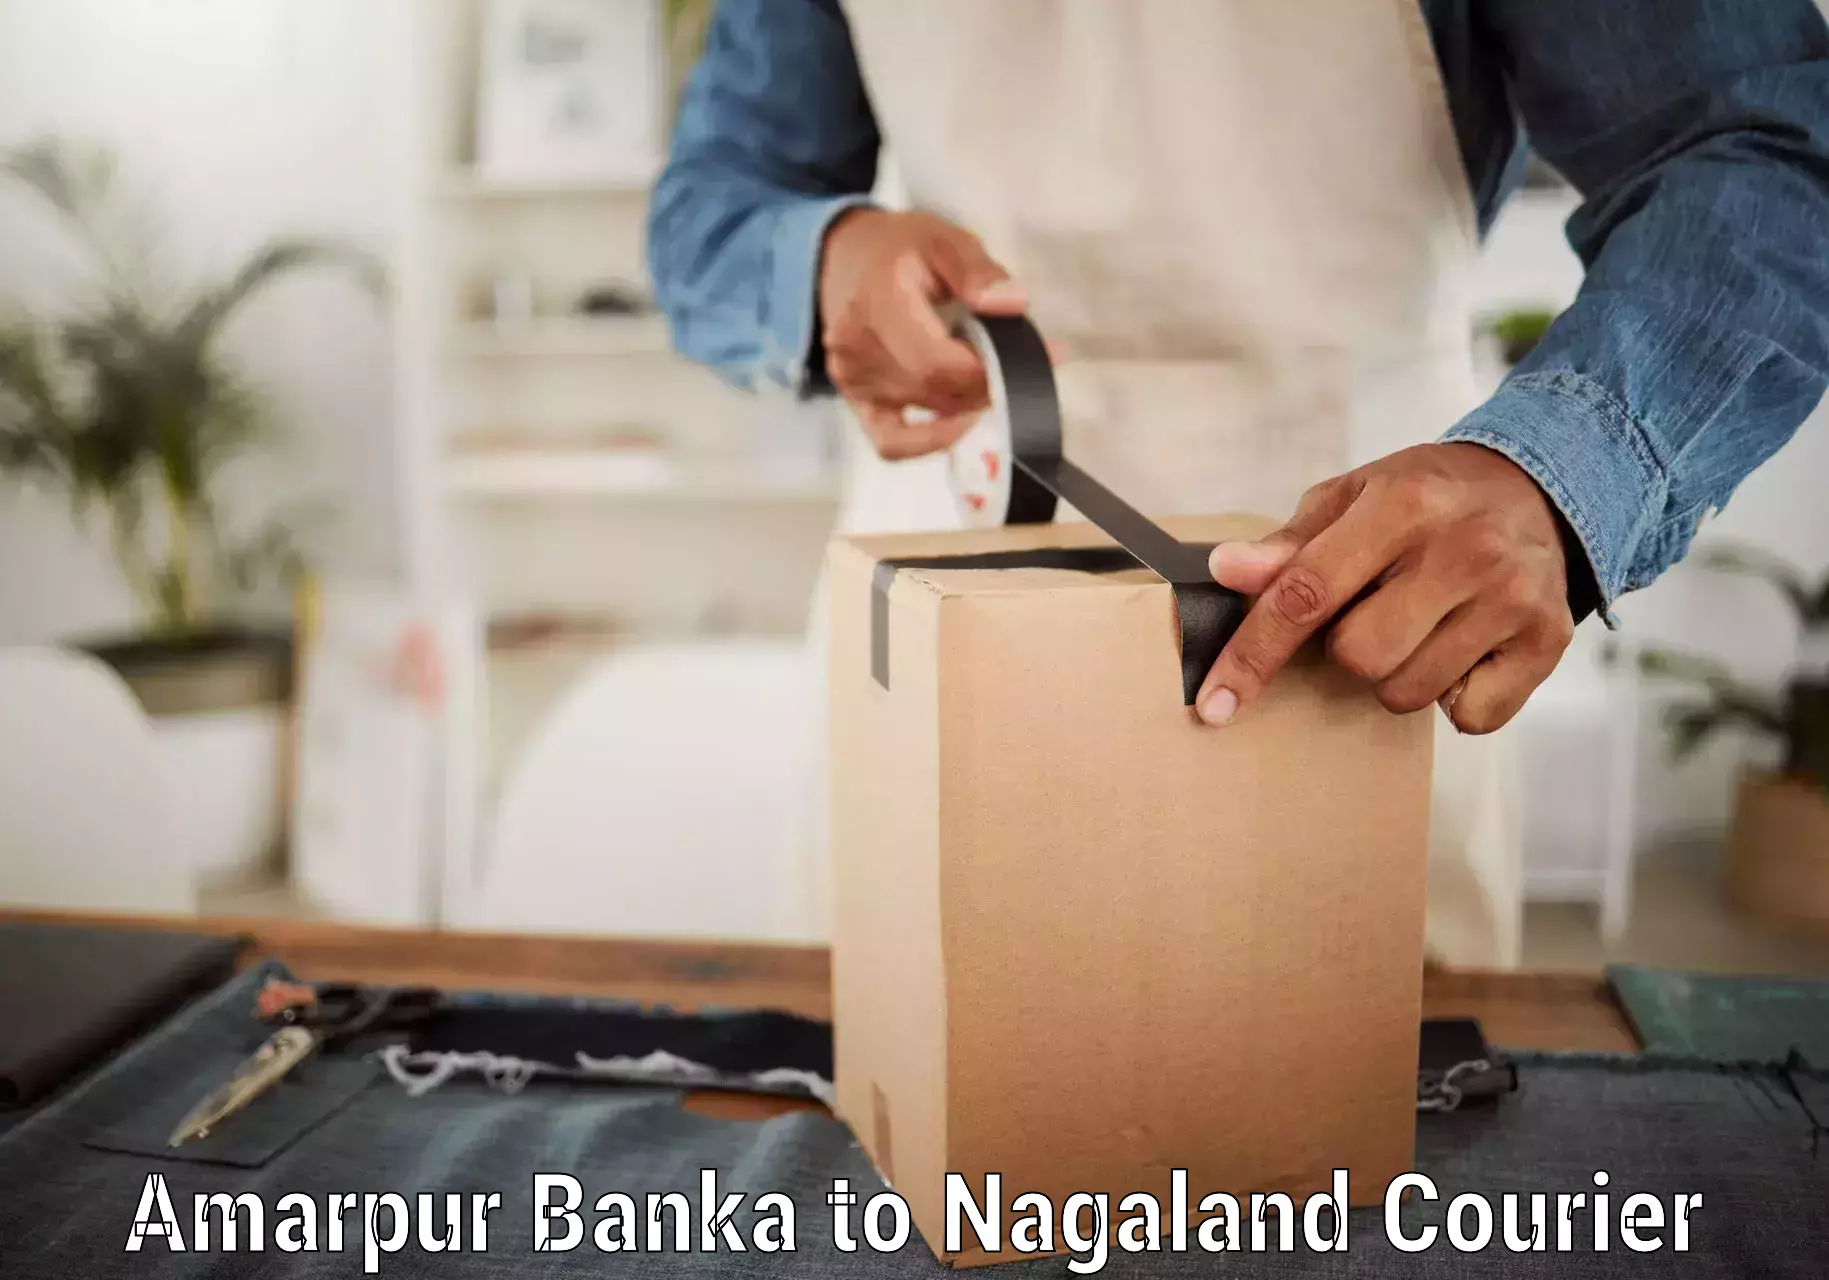 Reliable courier service Amarpur Banka to Peren